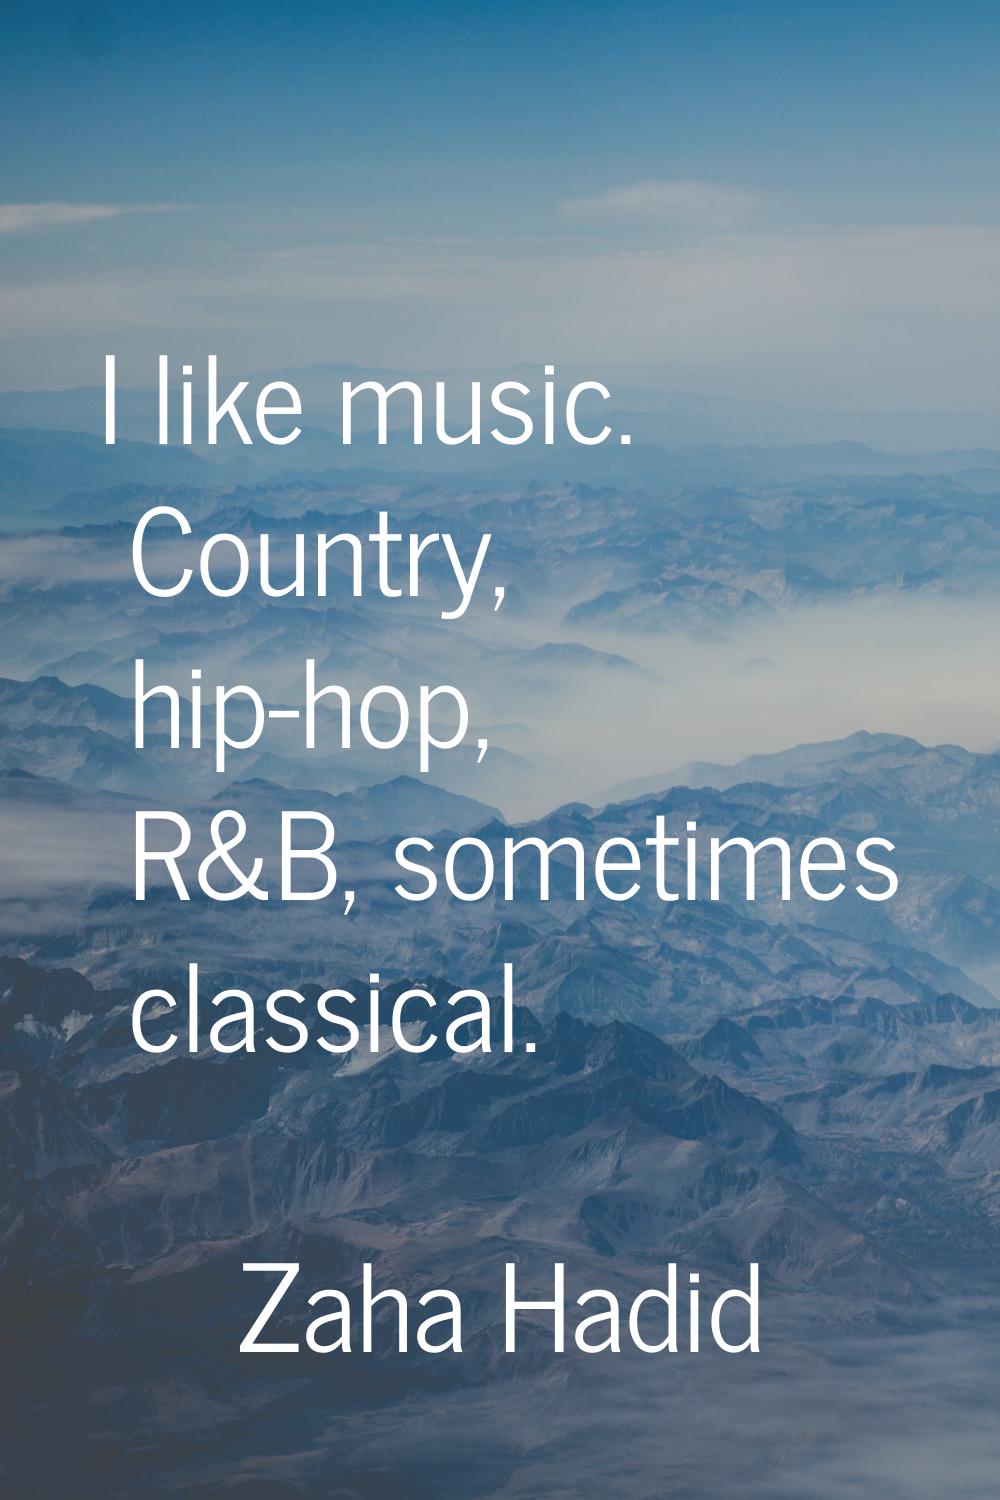 I like music. Country, hip-hop, R&B, sometimes classical.